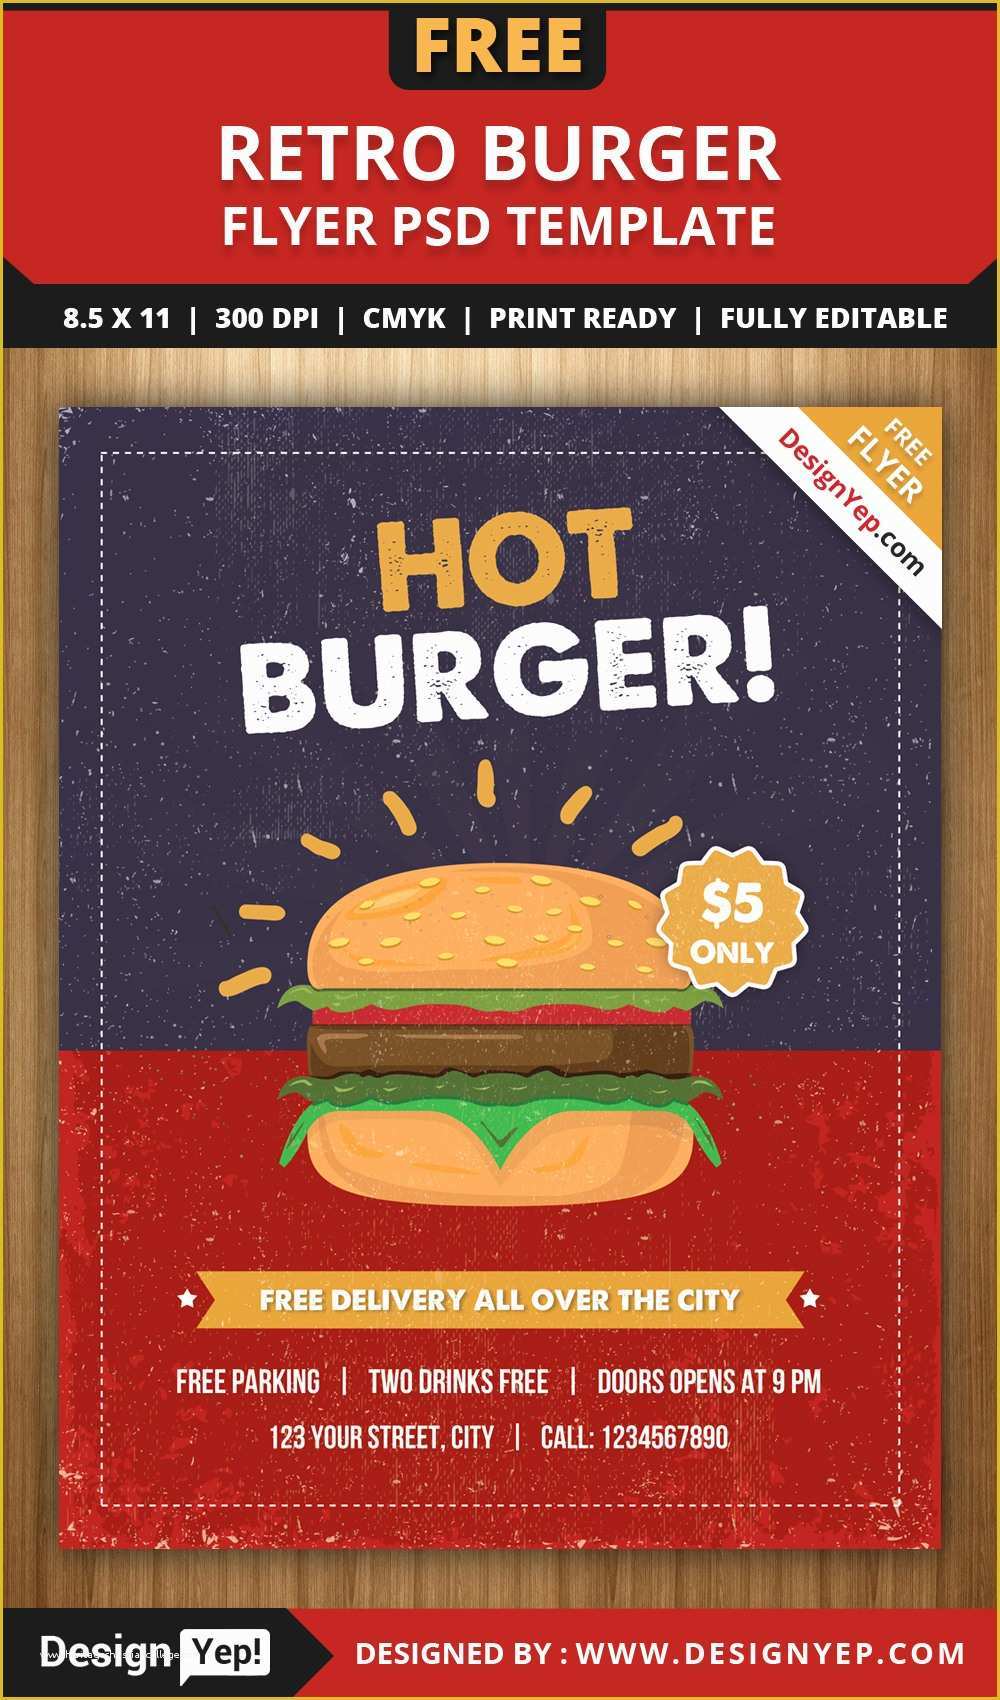 8.5 X 11 Flyer Template Free Of Free Retro Burger Flyer Psd Template Designyep